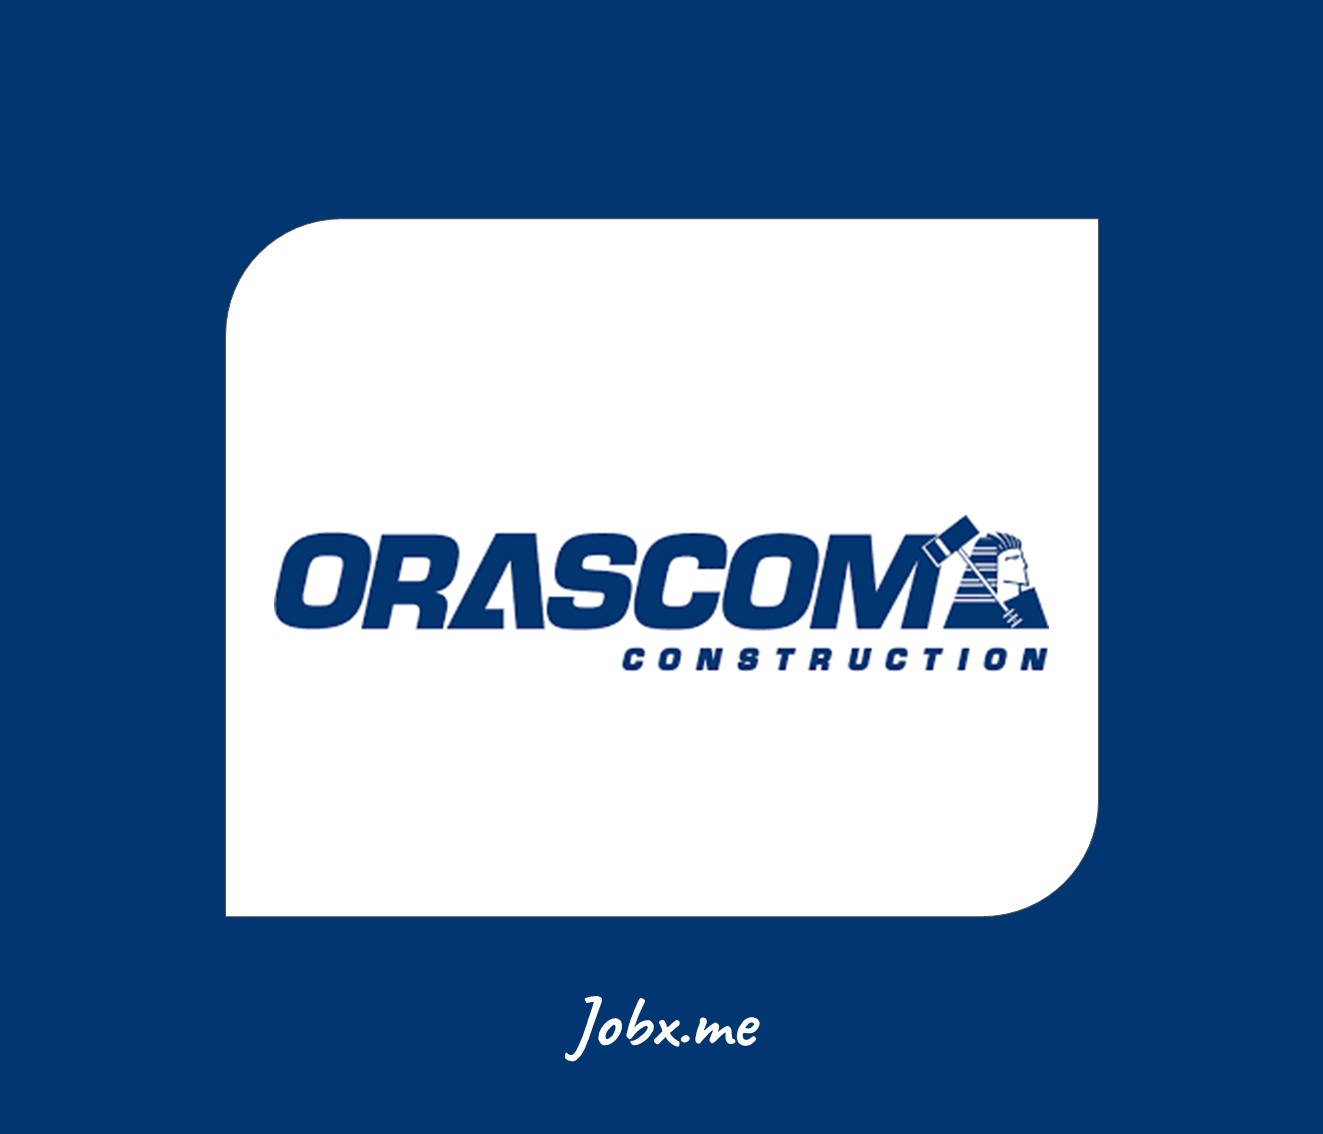 Orascom Jobs